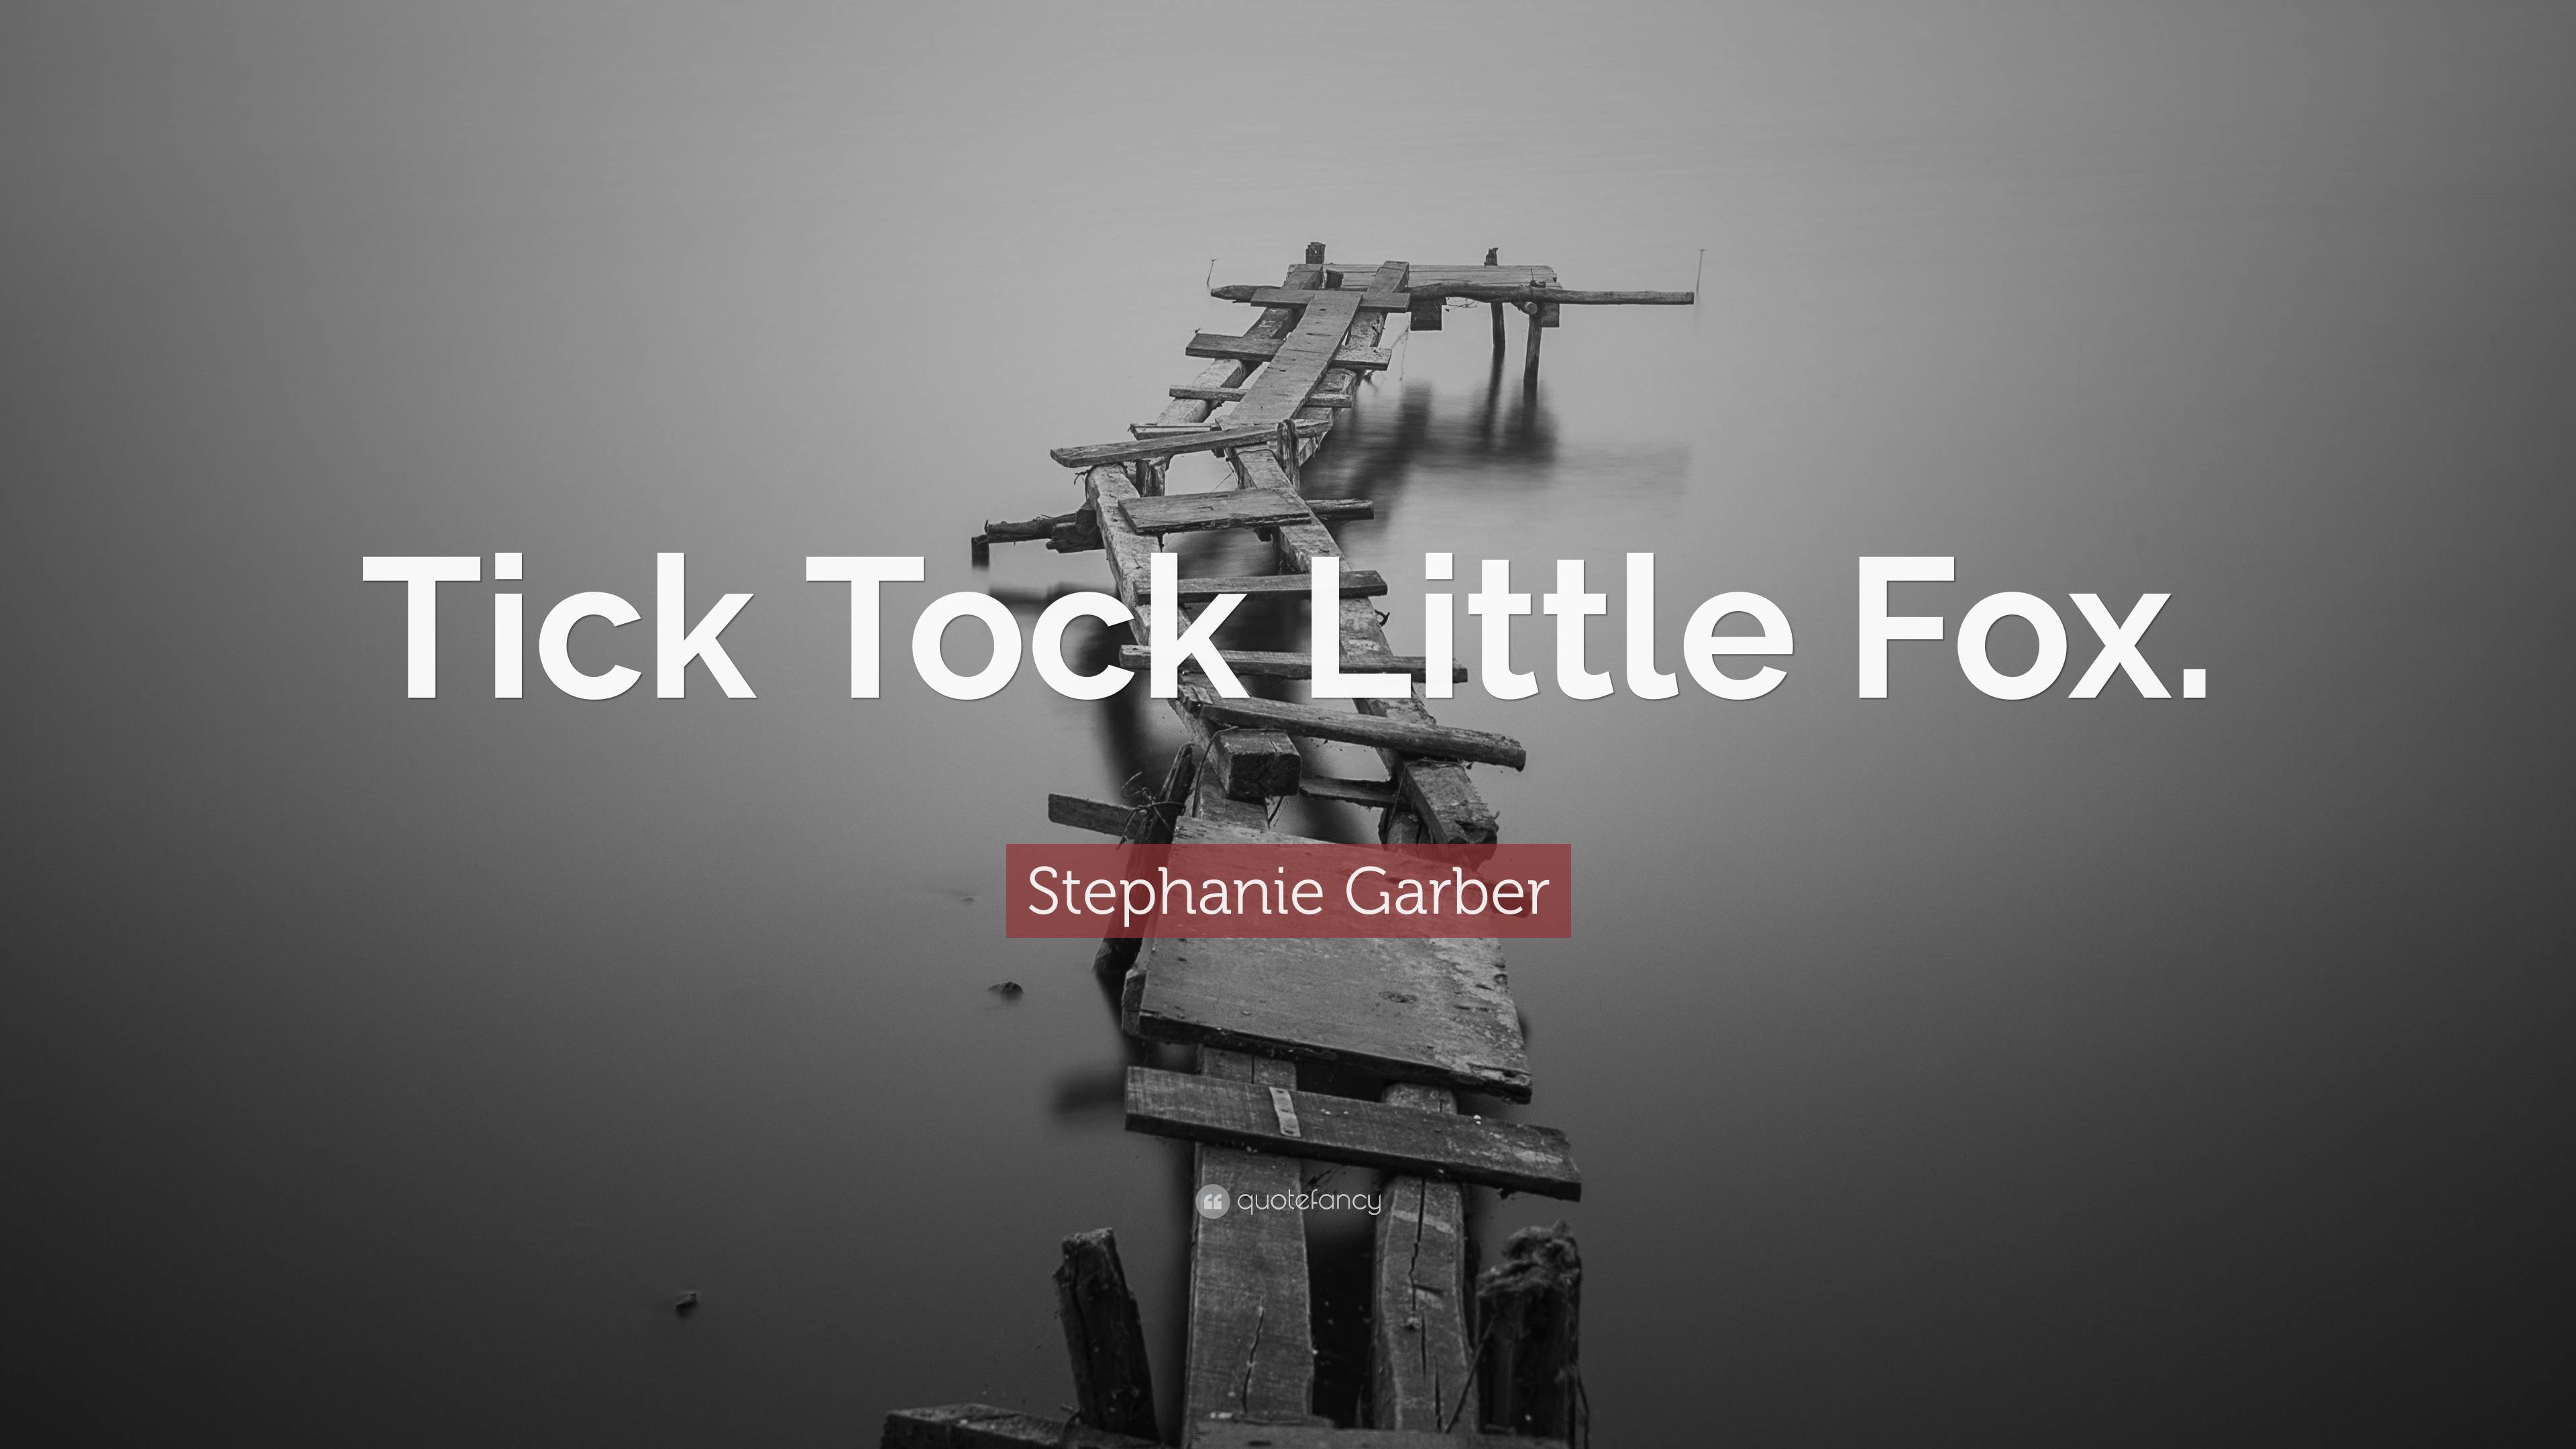 Stephanie Garber Quote: “Tick Tock Little Fox.”